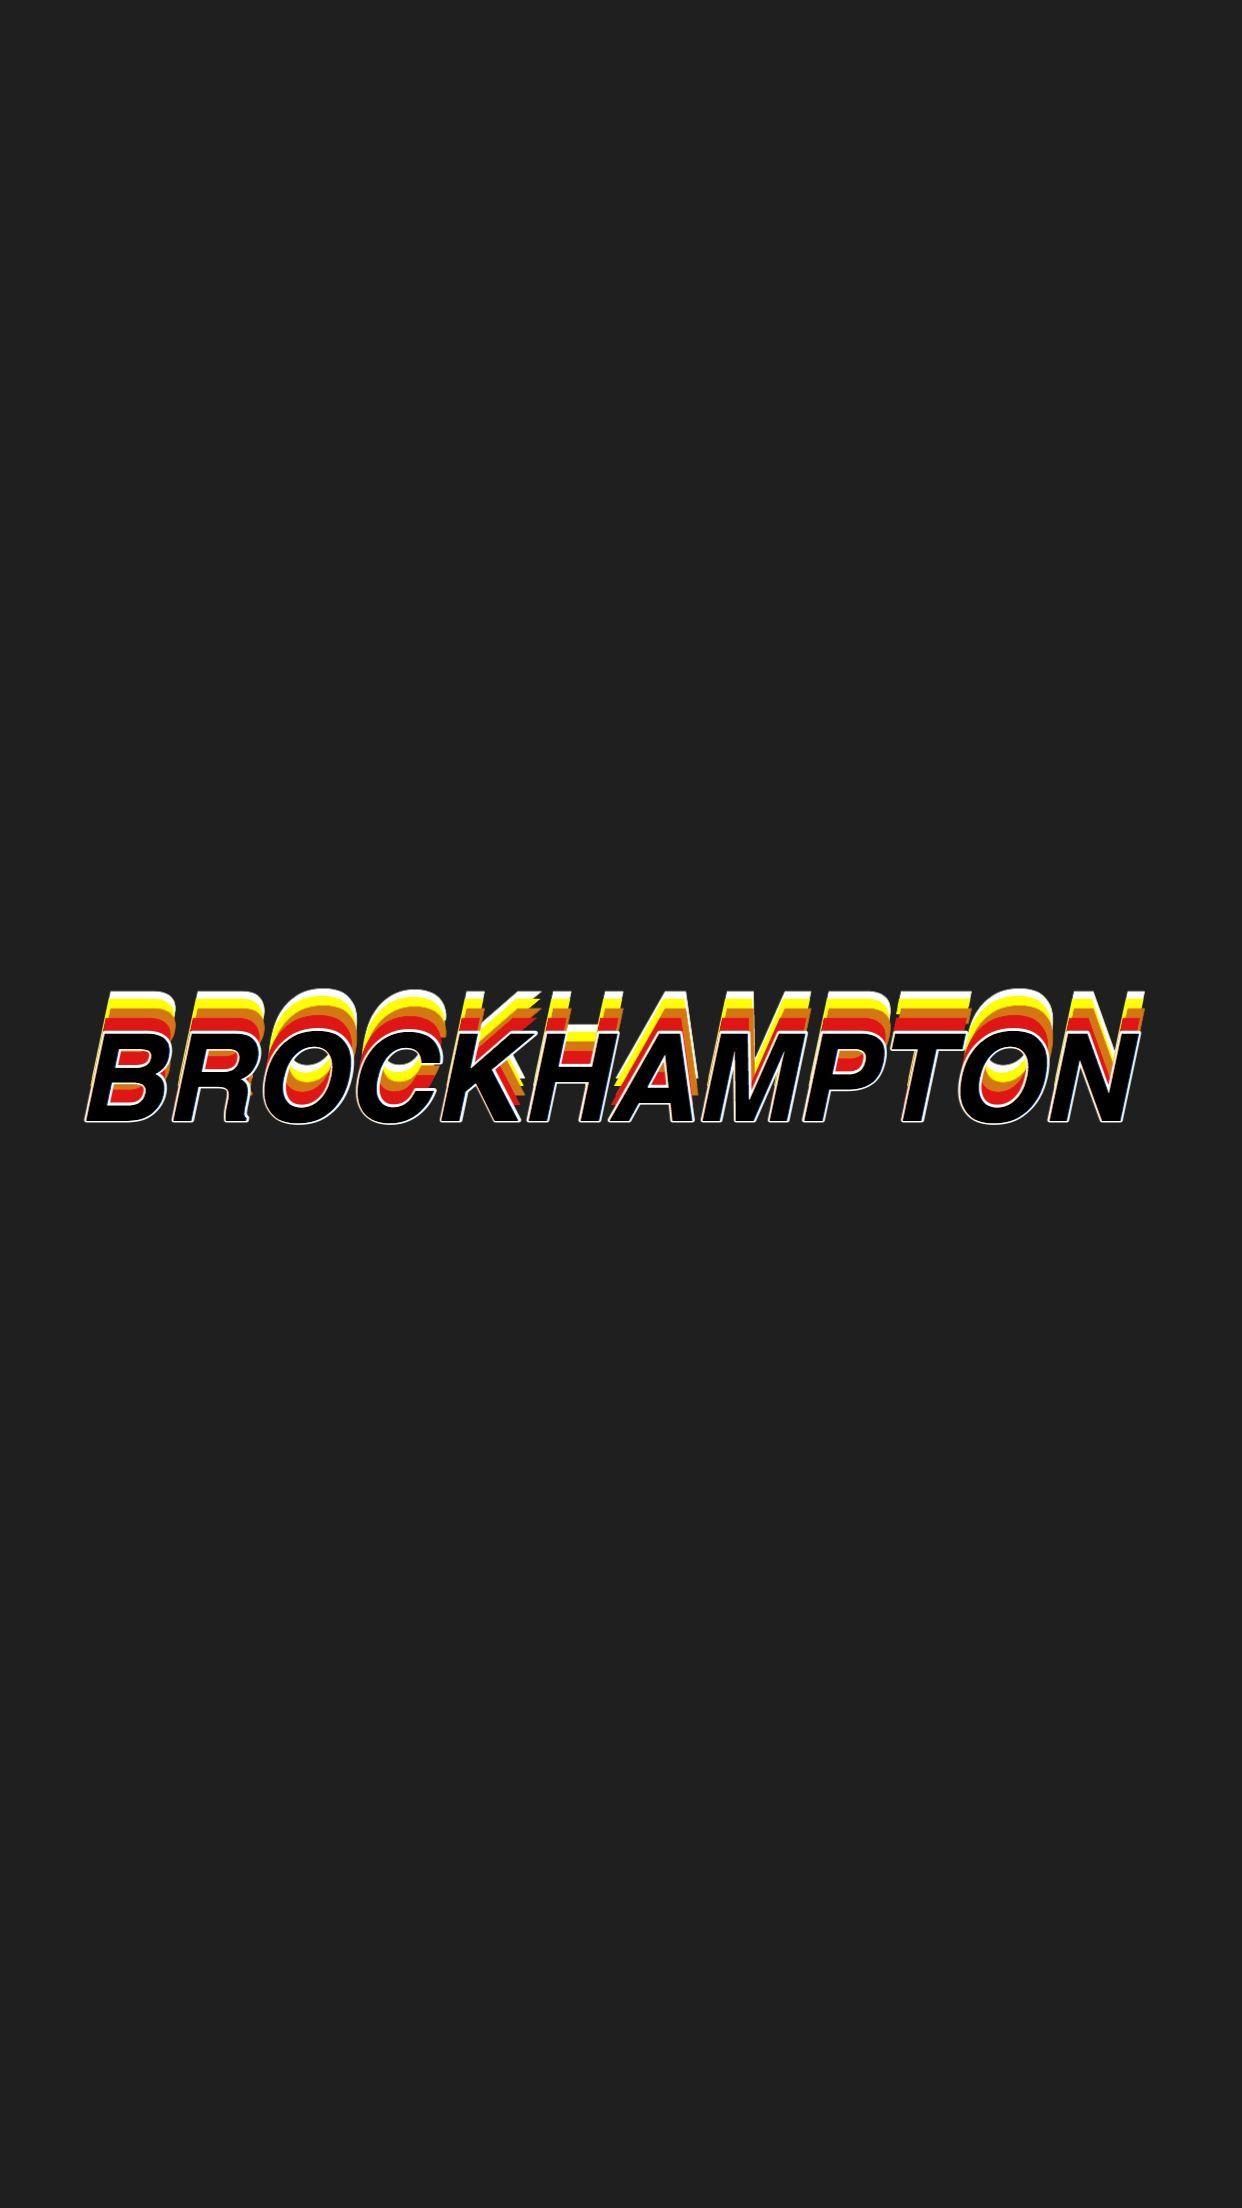 Brockhampton Logo - Brockhampton. BROCKHAMPTON <3. Aesthetic wallpaper, Music